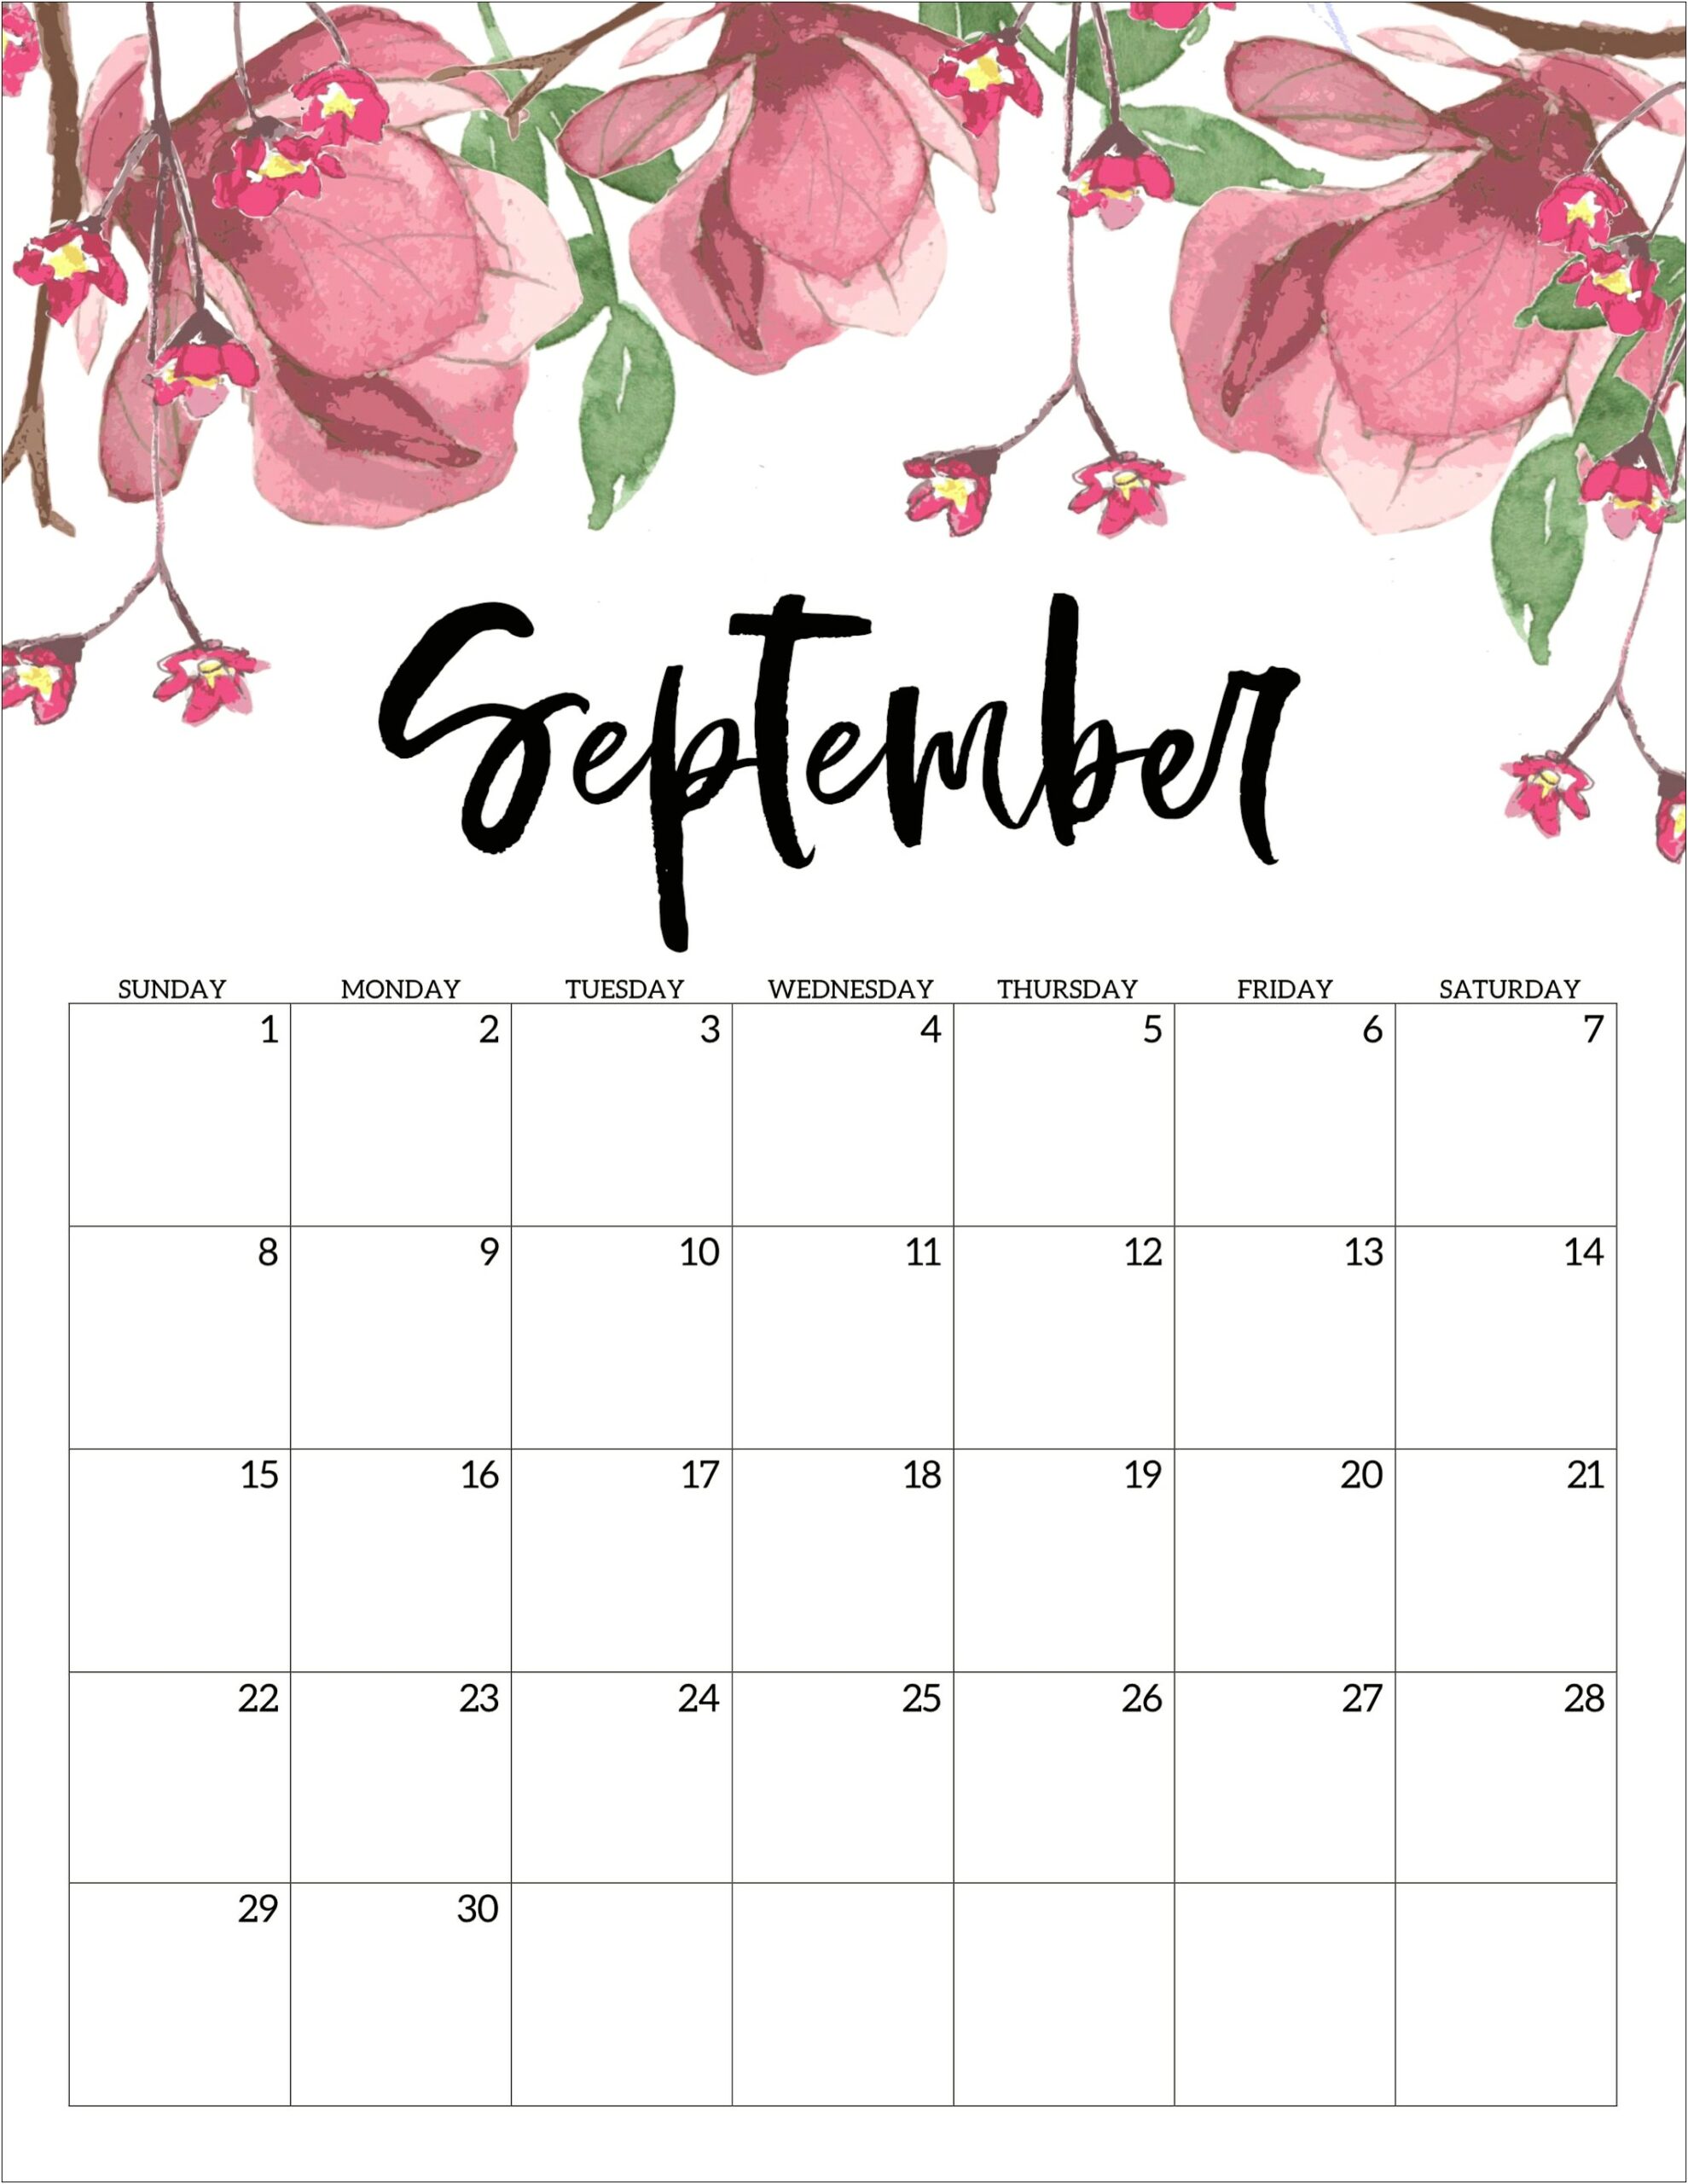 Free Blank Calendar Template September 2019